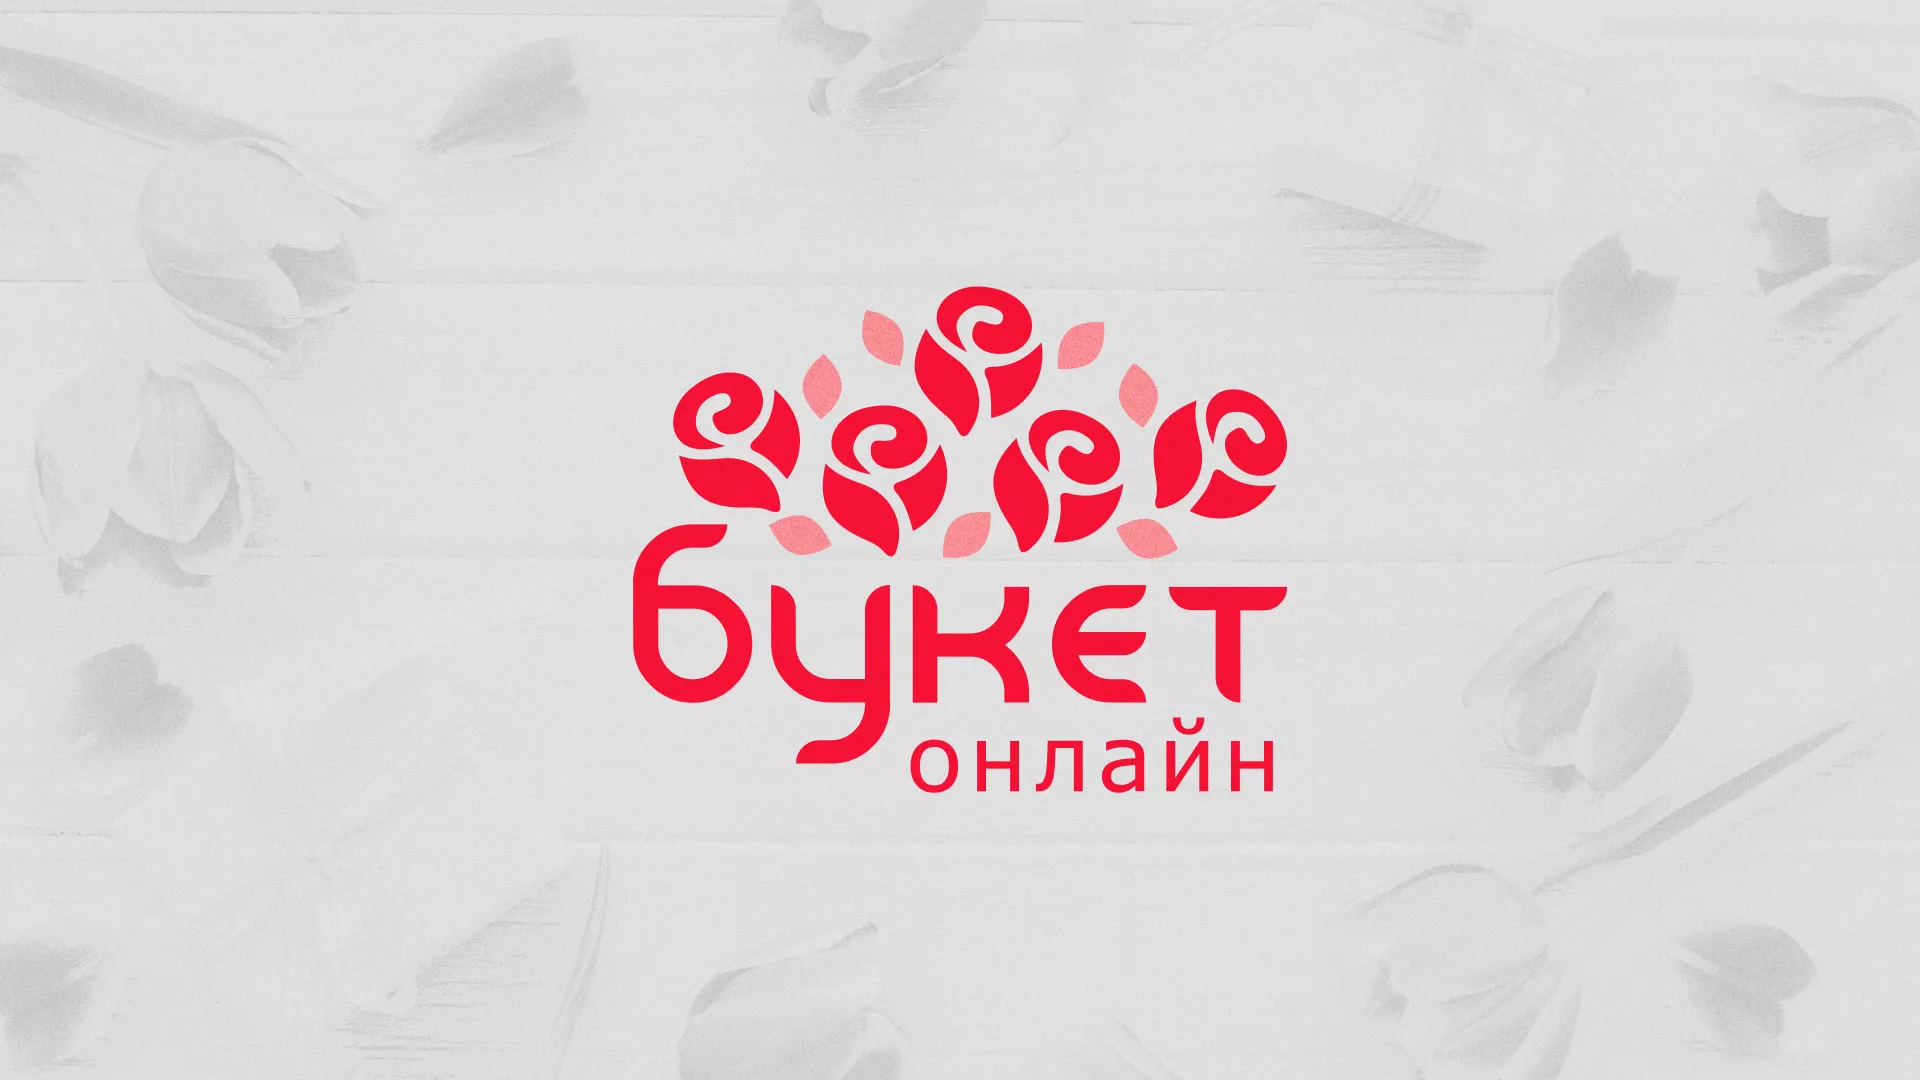 Создание интернет-магазина «Букет-онлайн» по цветам в Тамбове